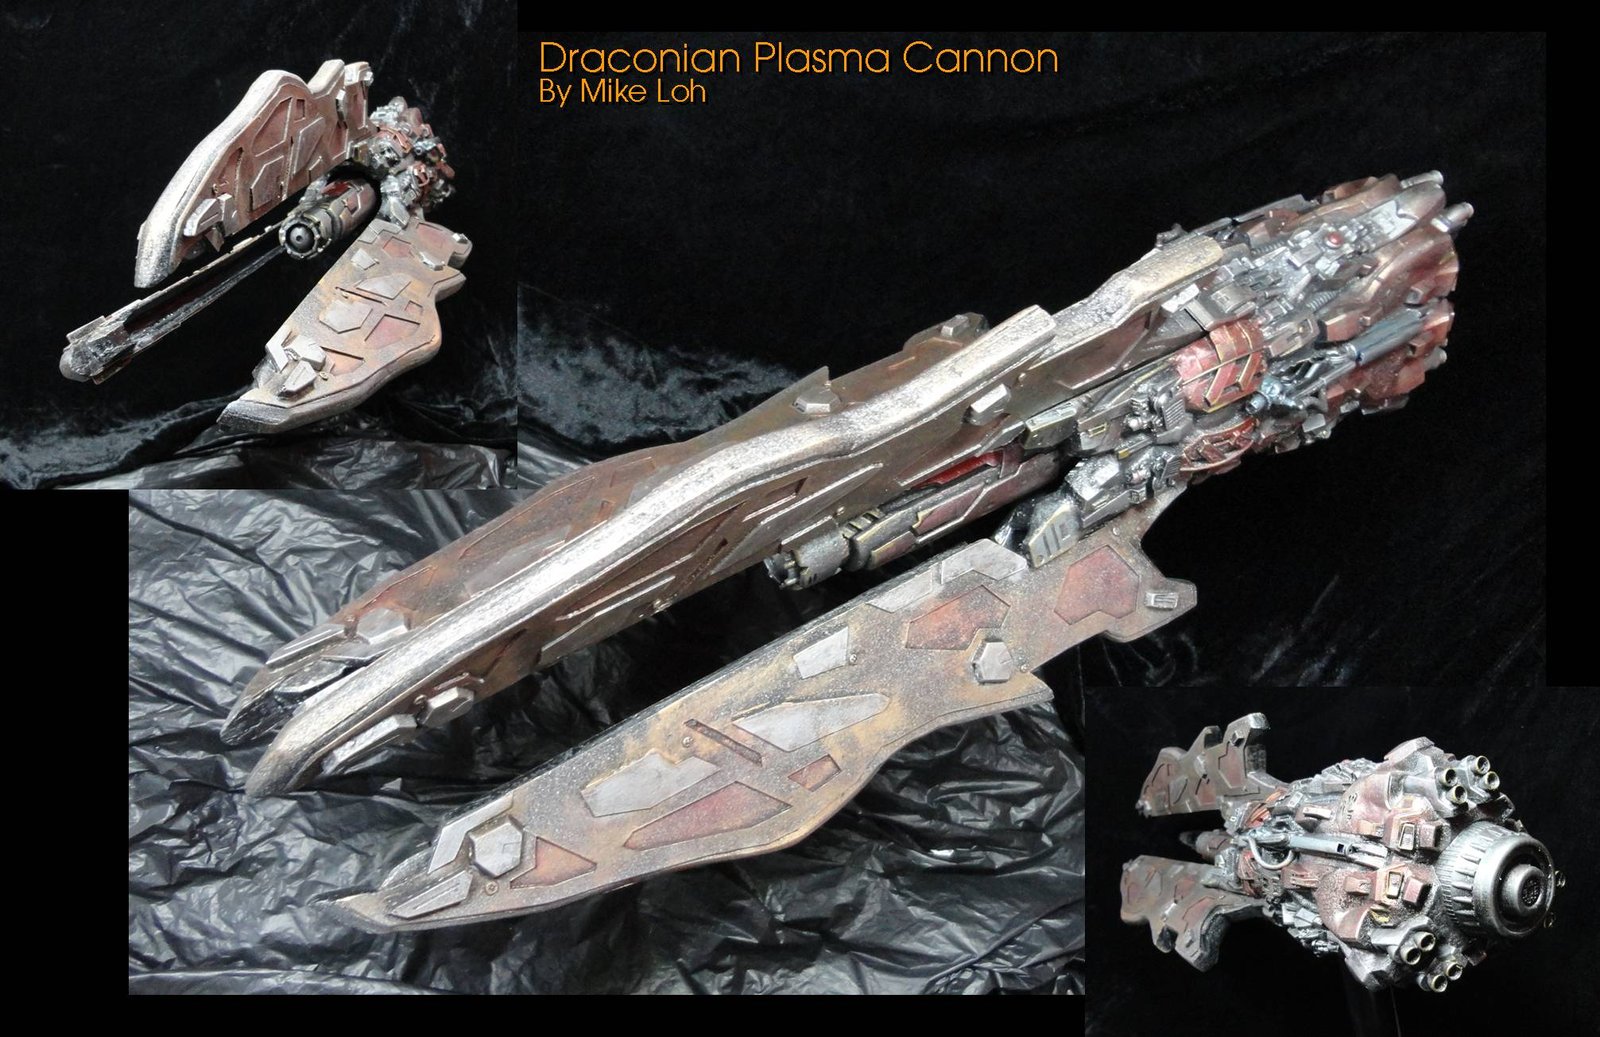 the_draconian_plasma_cannon_01_by_uratz_studios-d51xhr6.jpg